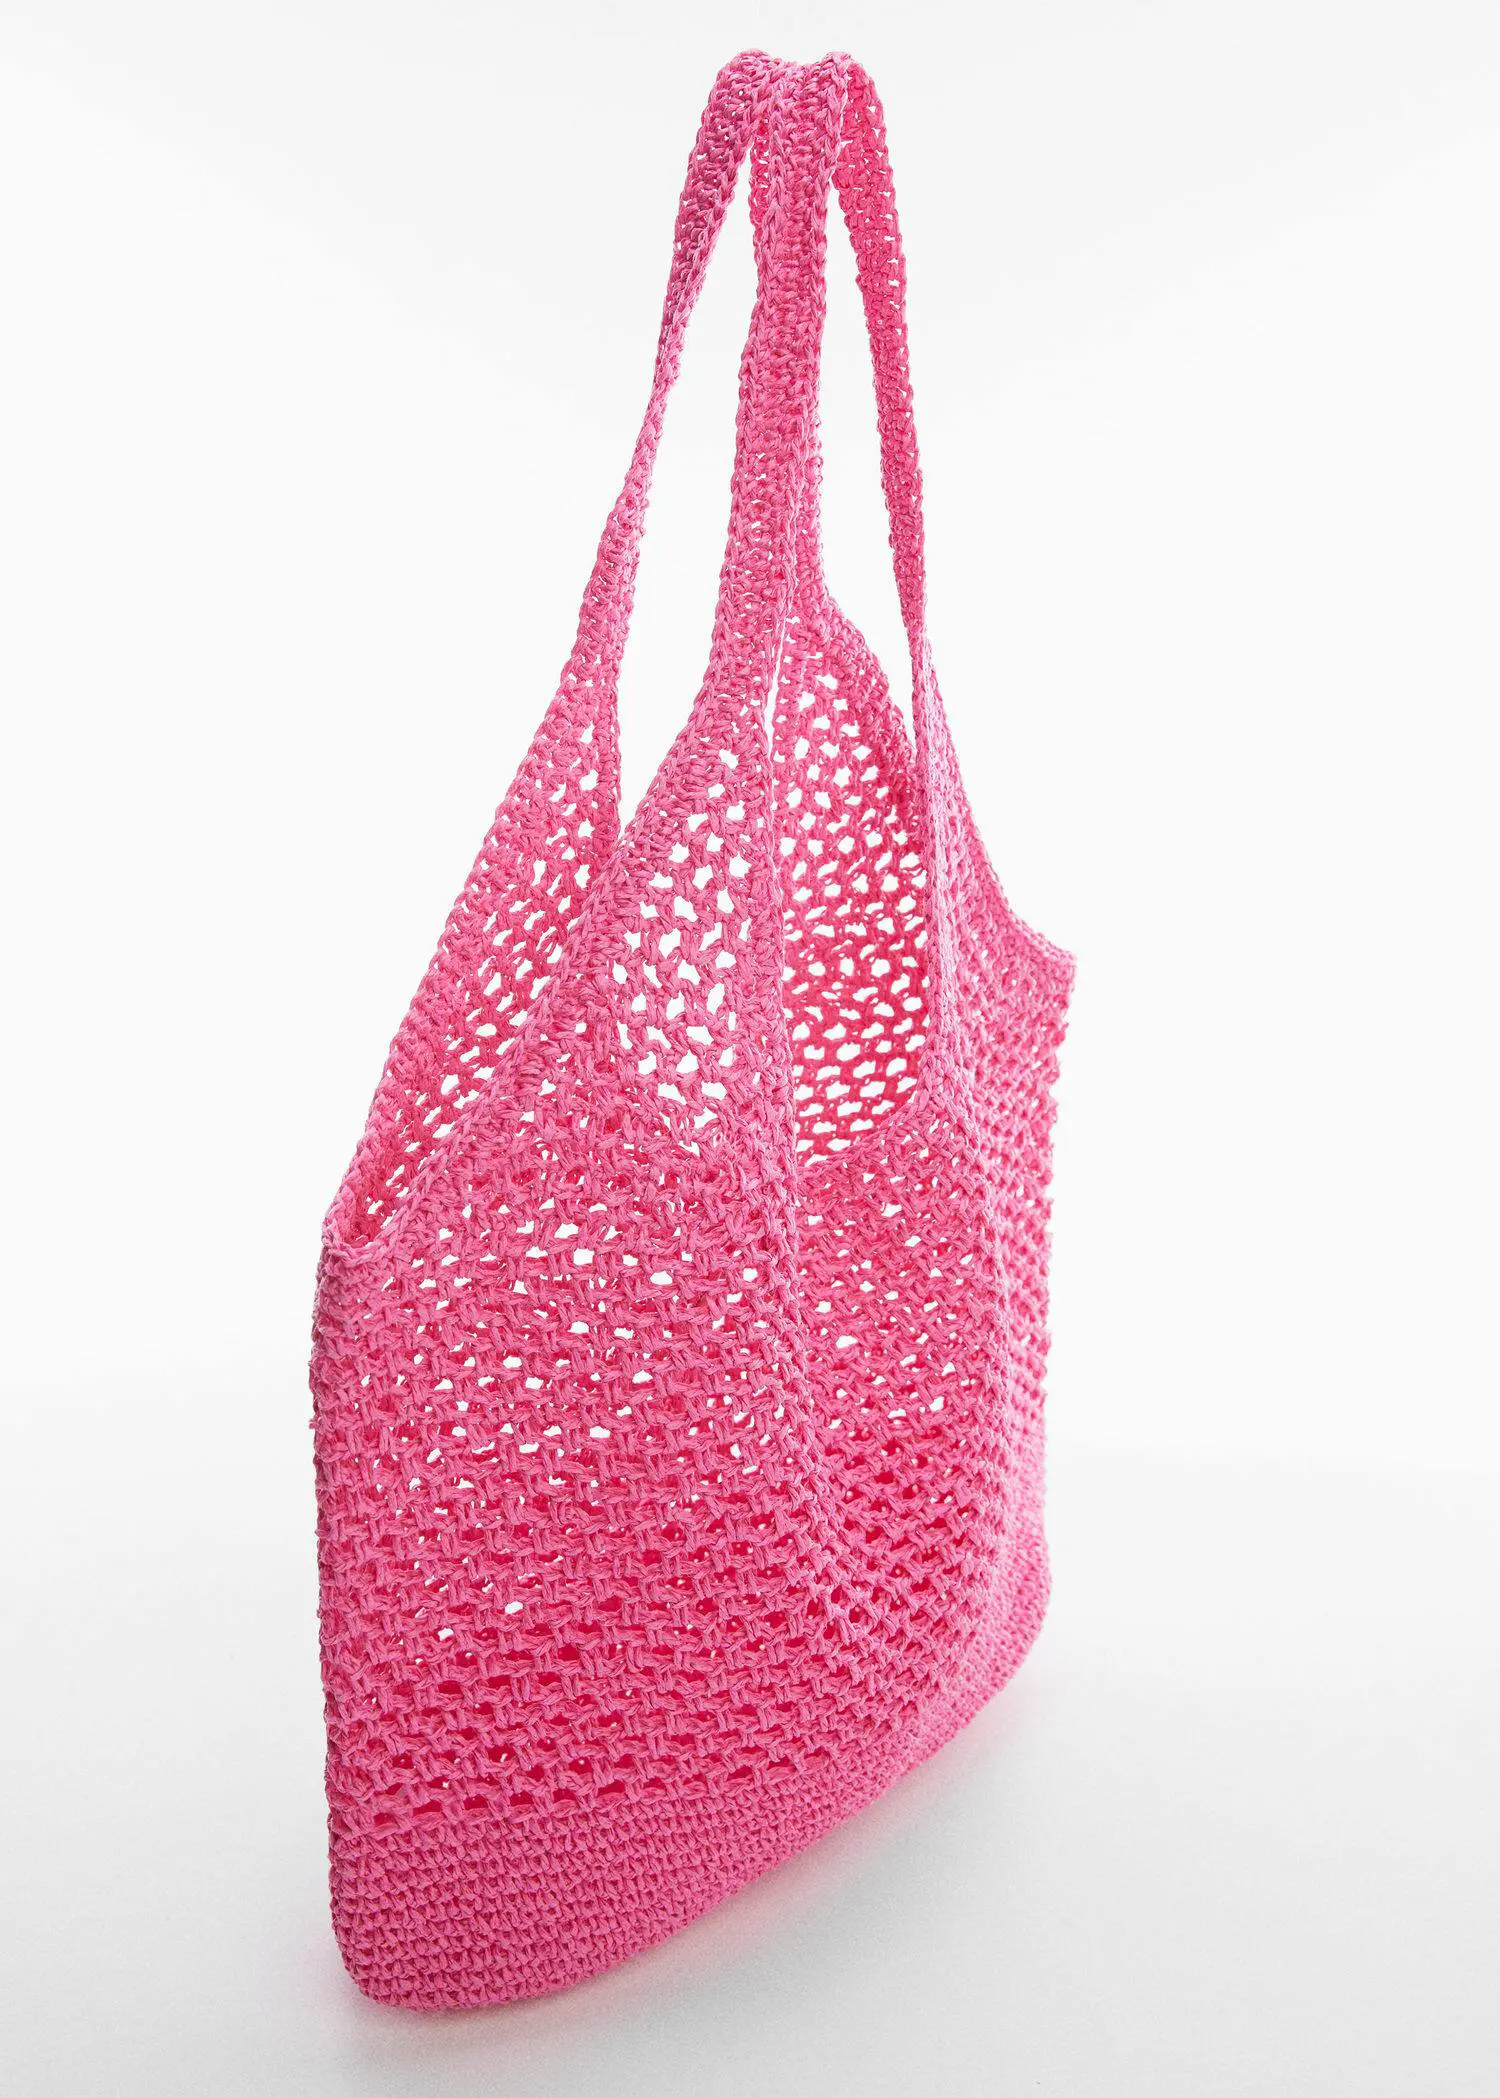 Mango Natural fibre sack bag. a close up of a pink crocheted bag. 